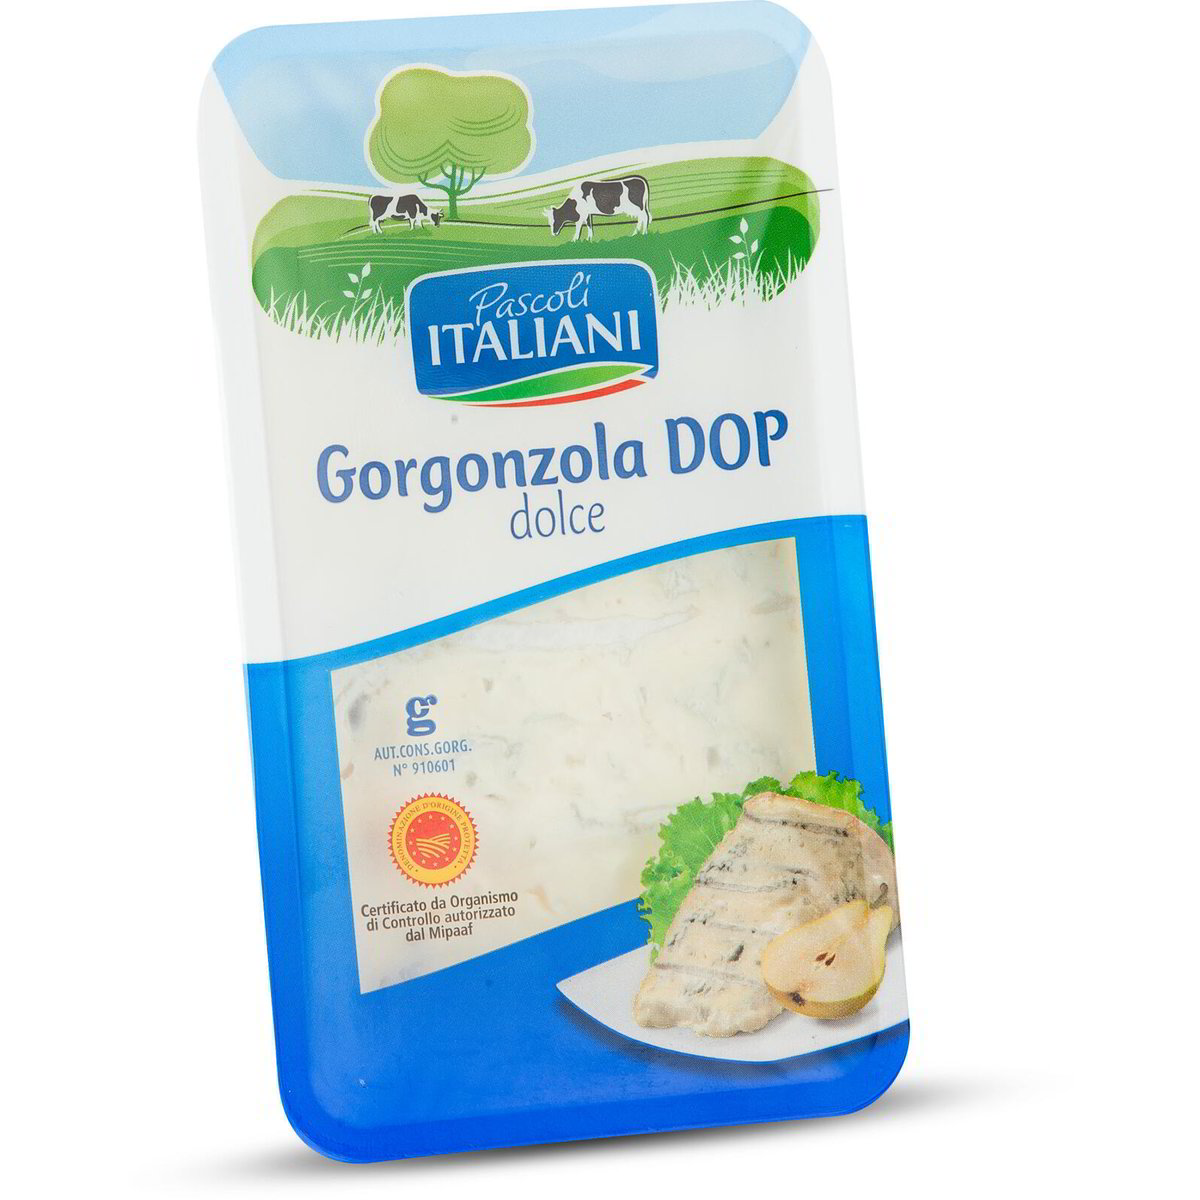 Gorgonzola dolce DOP ritirato